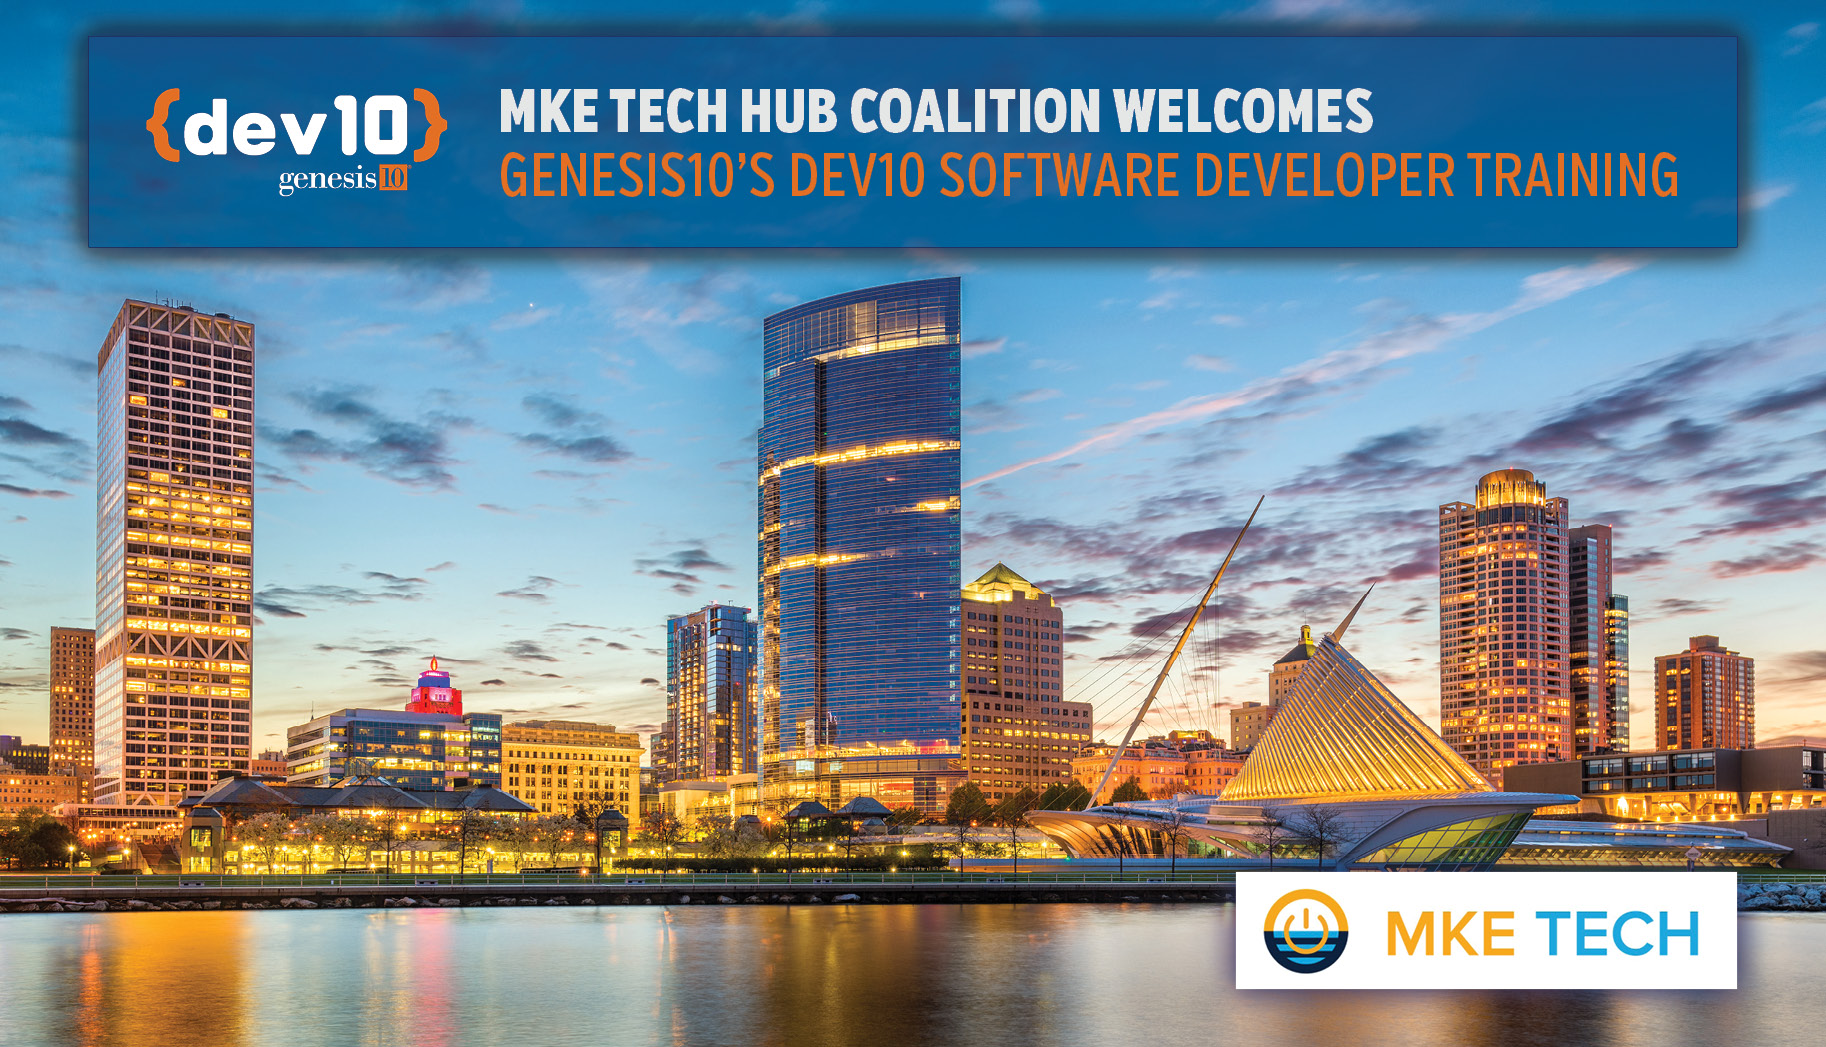 mke-tech-hub-coalition-welcomes-dev10-software-developer-training